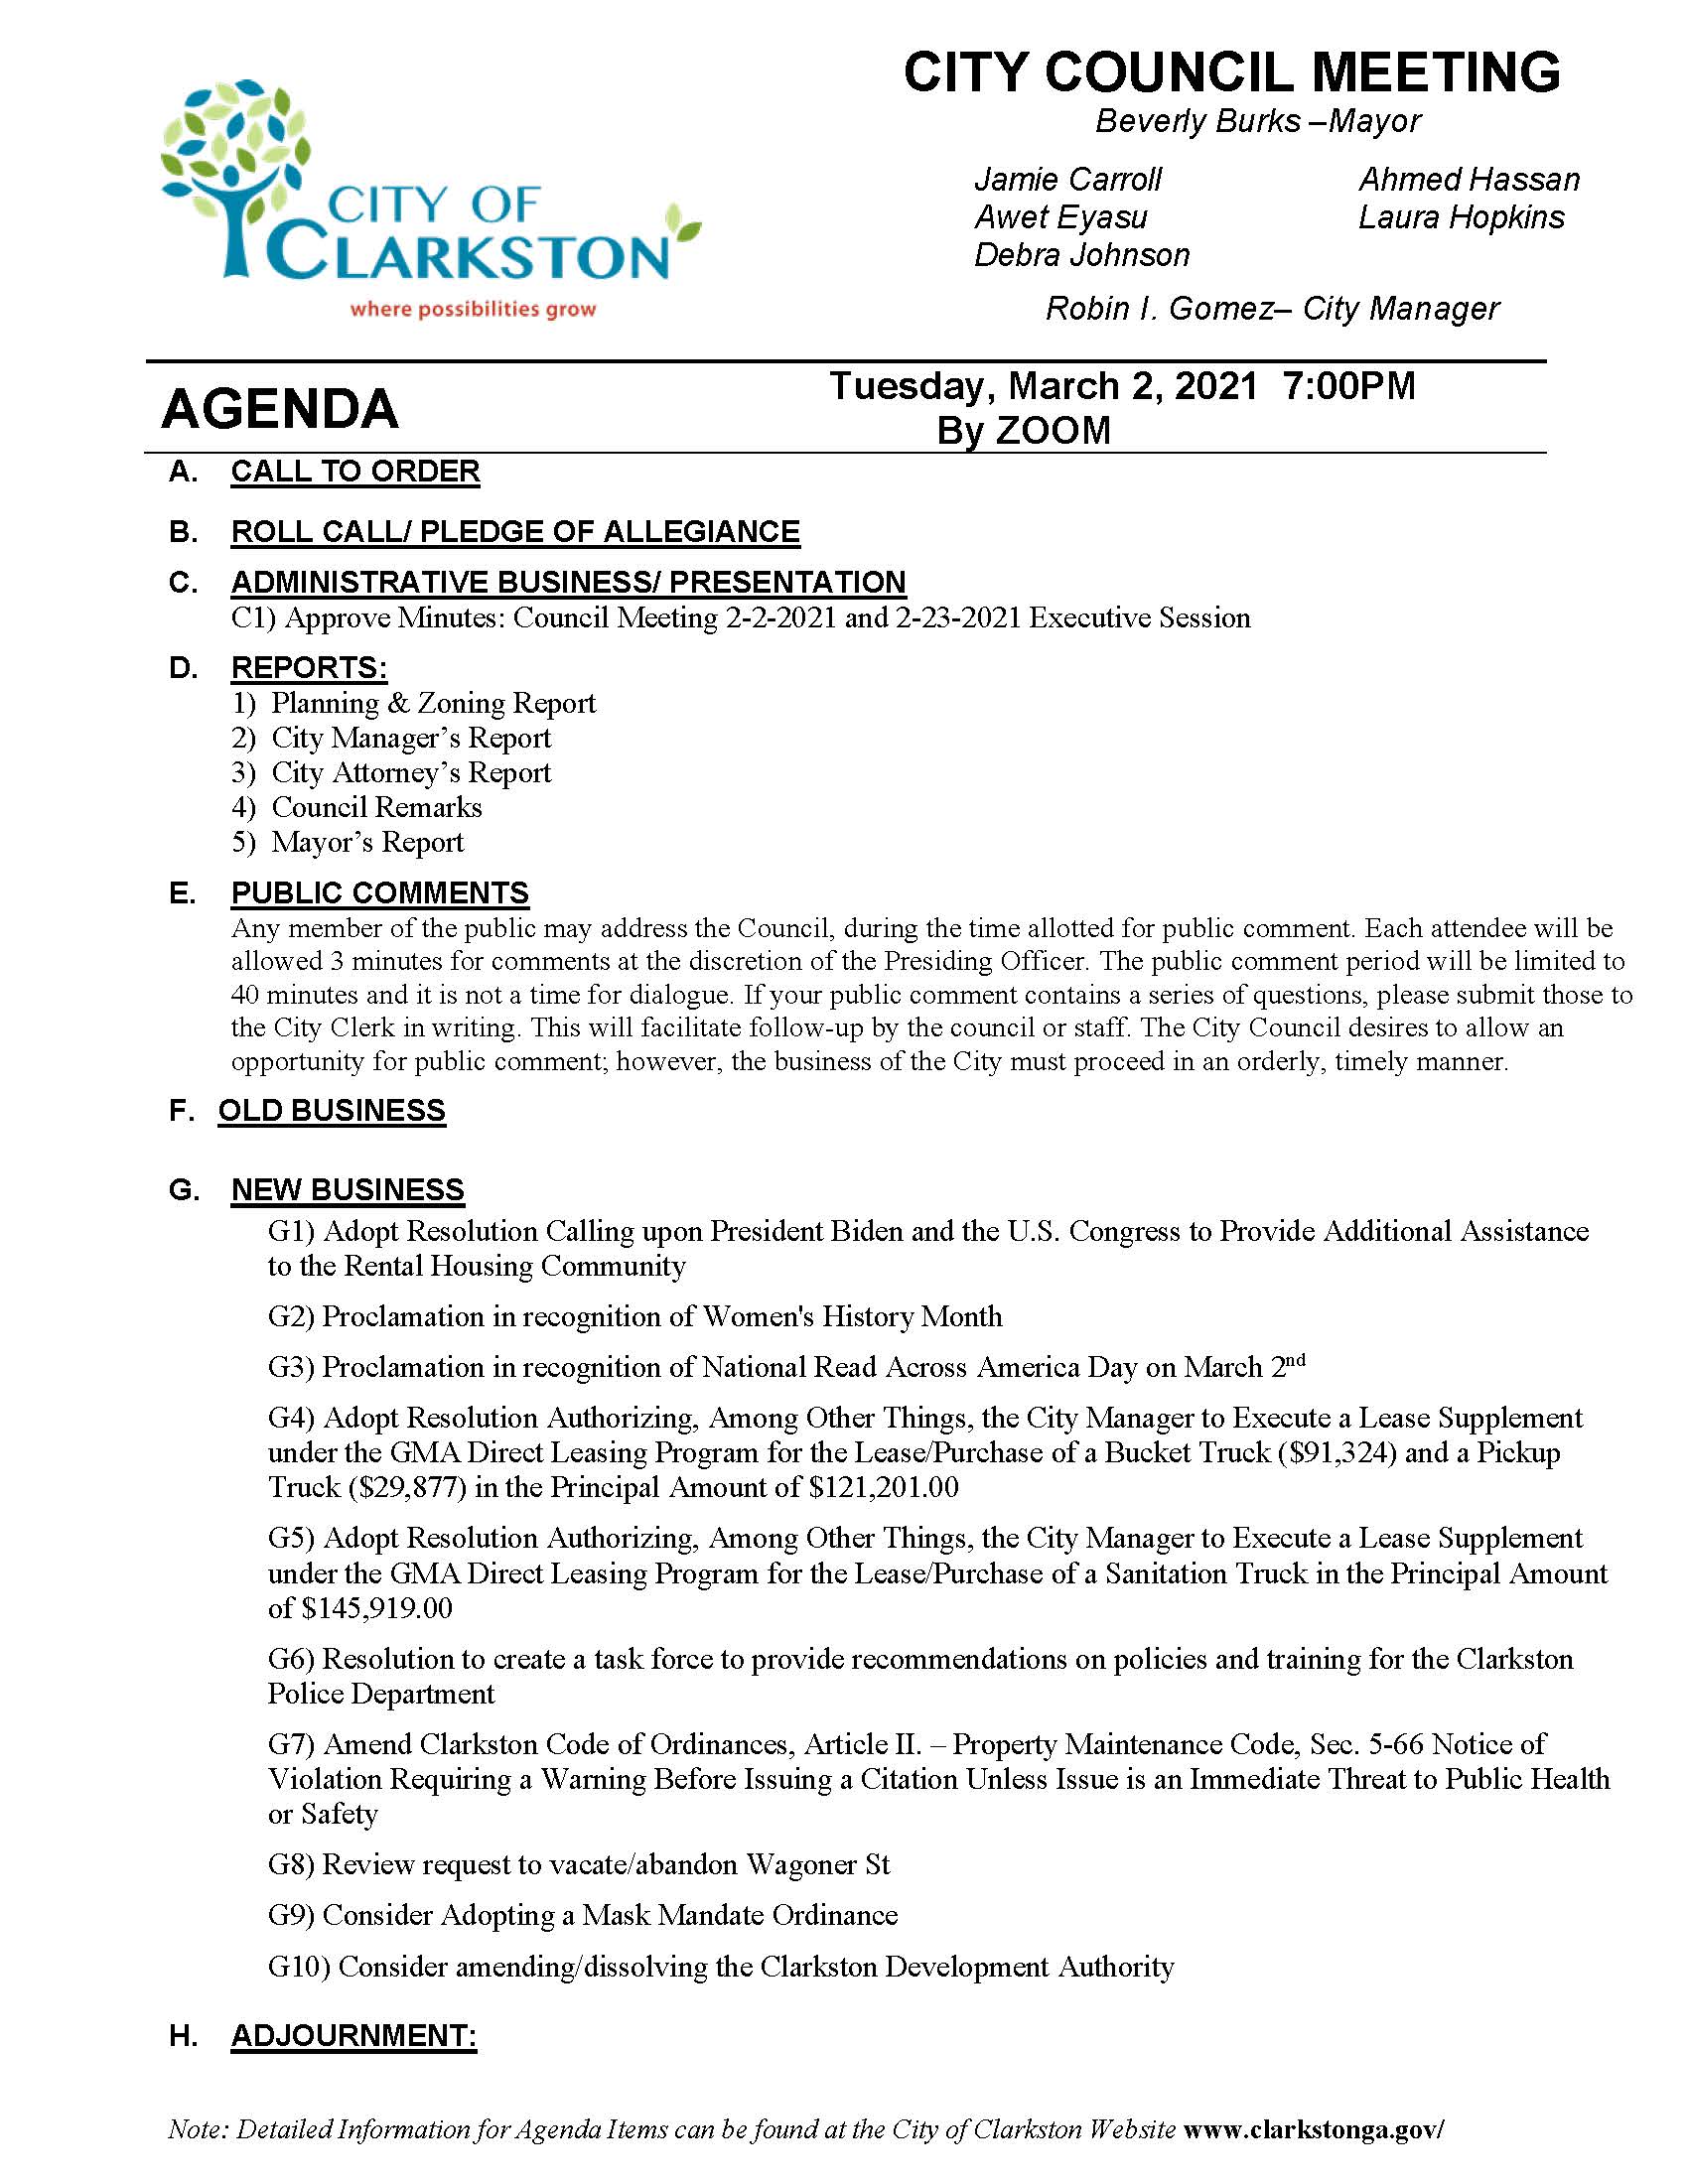 council agenda 3-2-2021